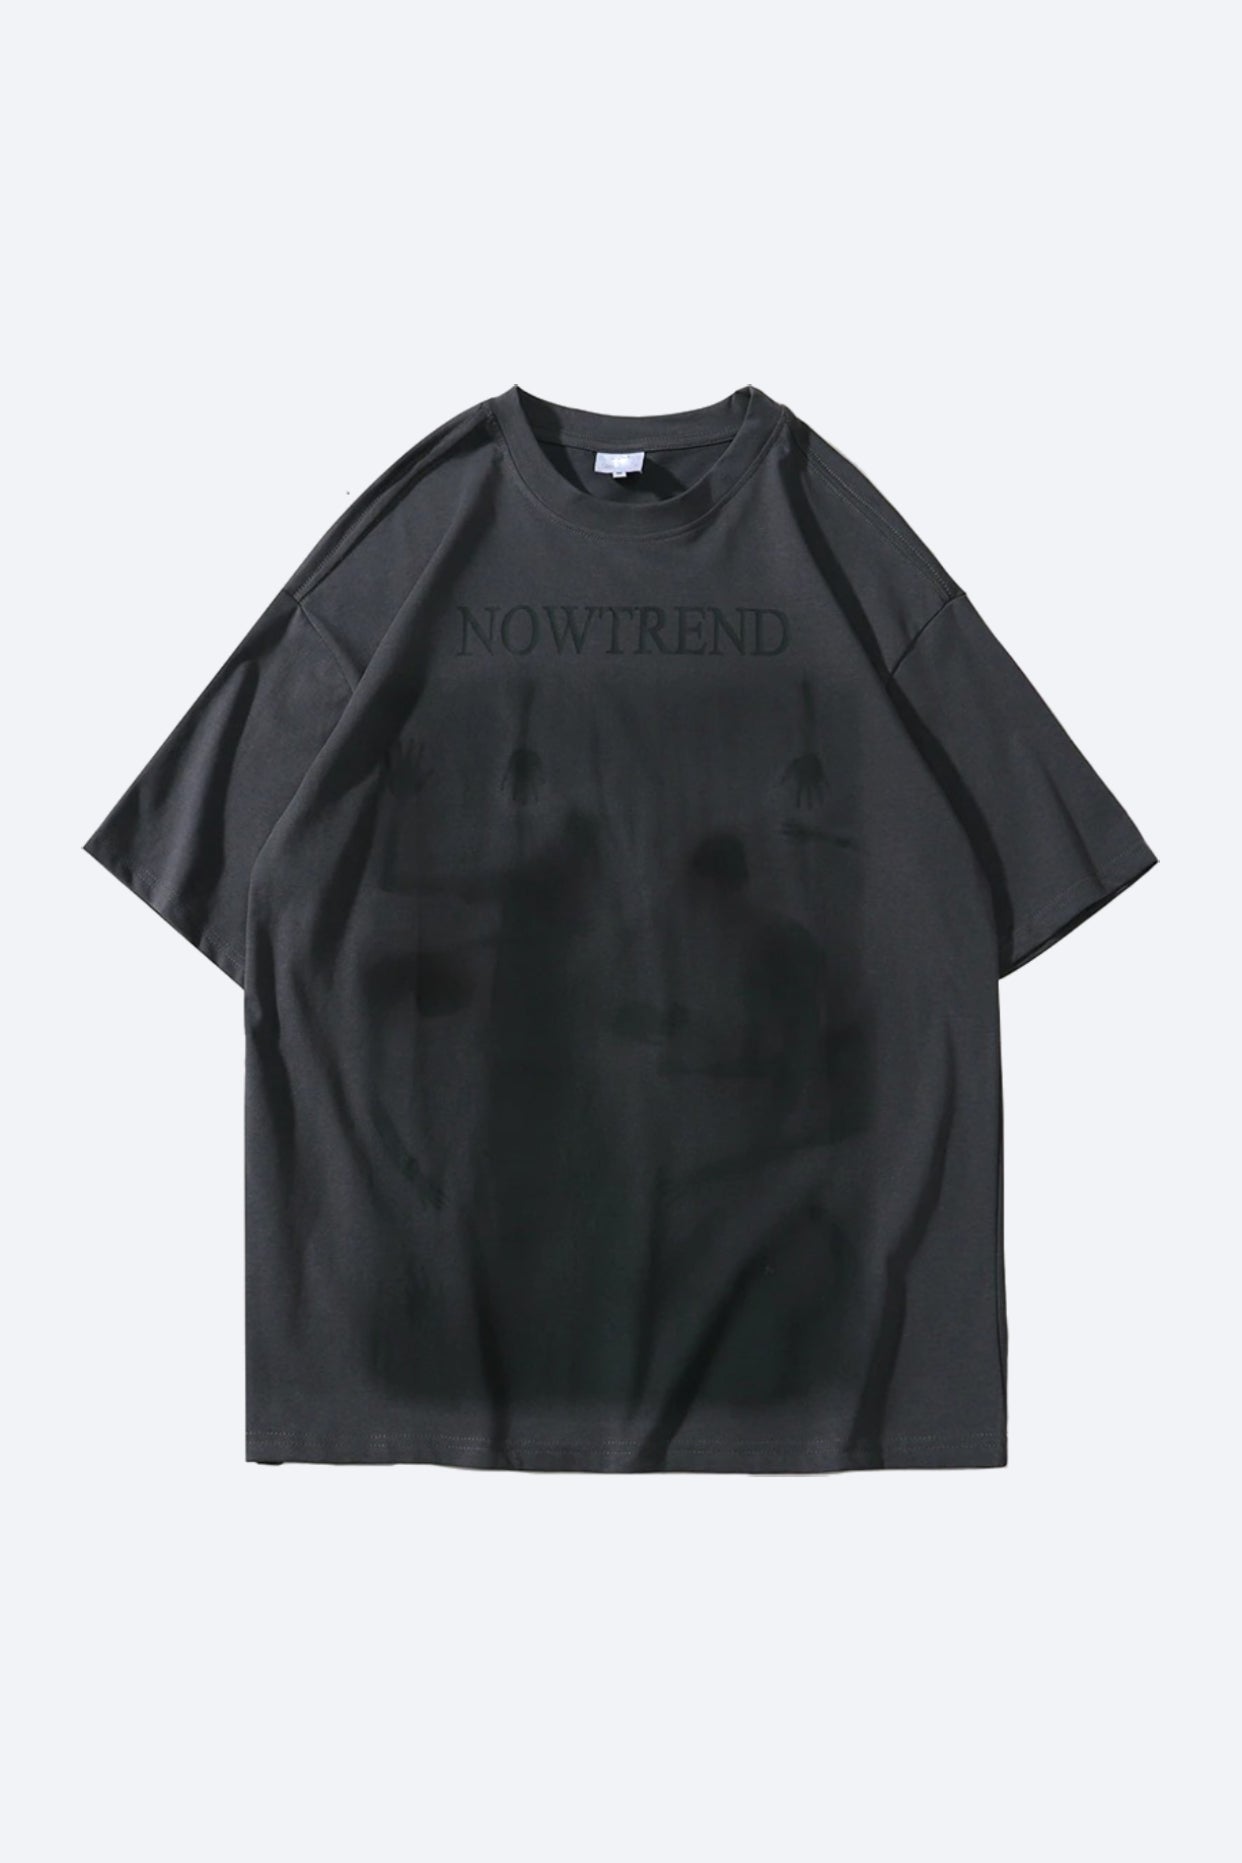 Ghosting T-Shirt Streetwear Brand Techwear Combat Tactical YUGEN THEORY